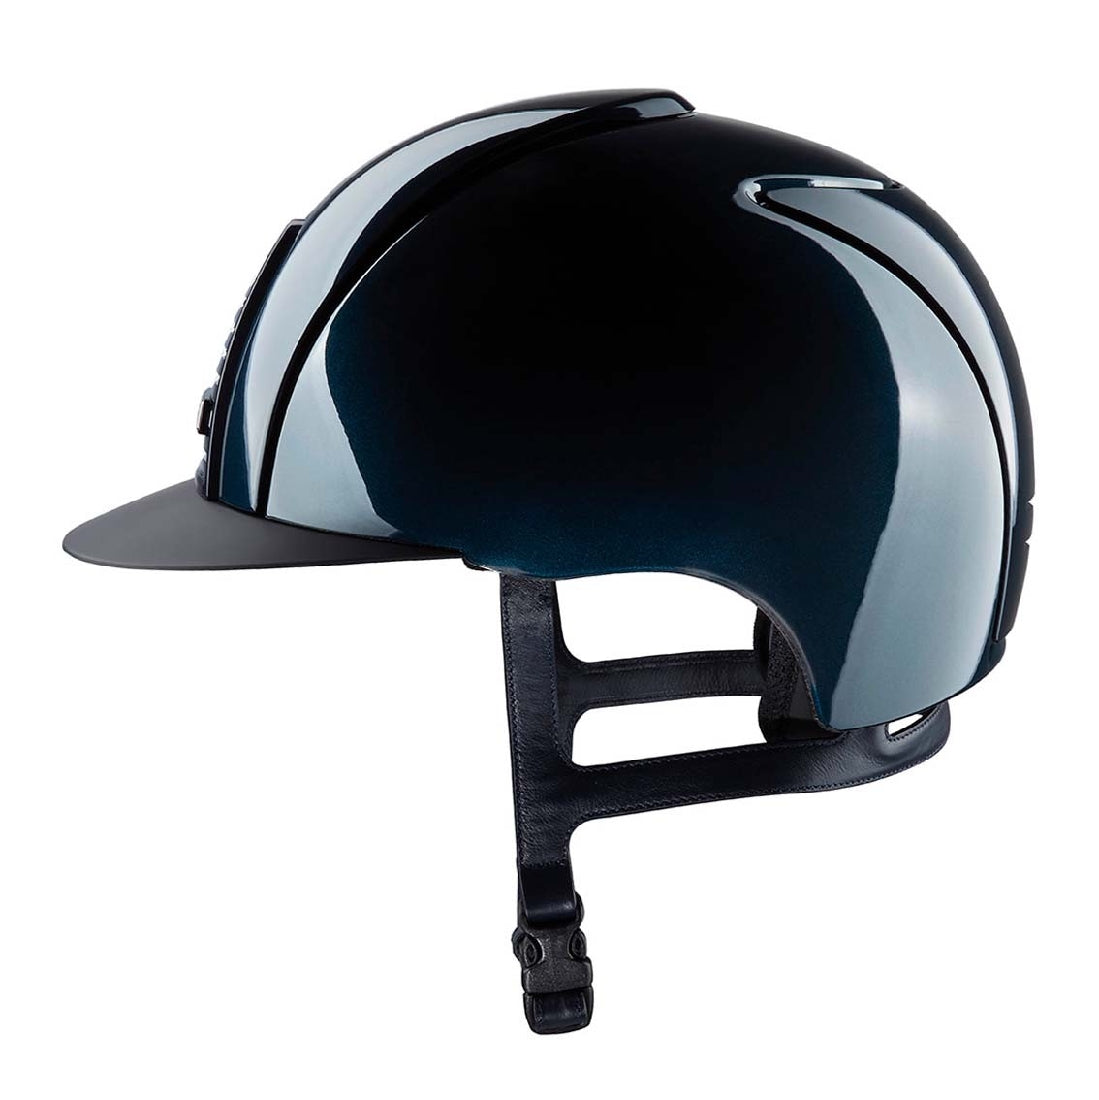 KEP brand equestrian helmet, black and chrome, modern design, safety gear.